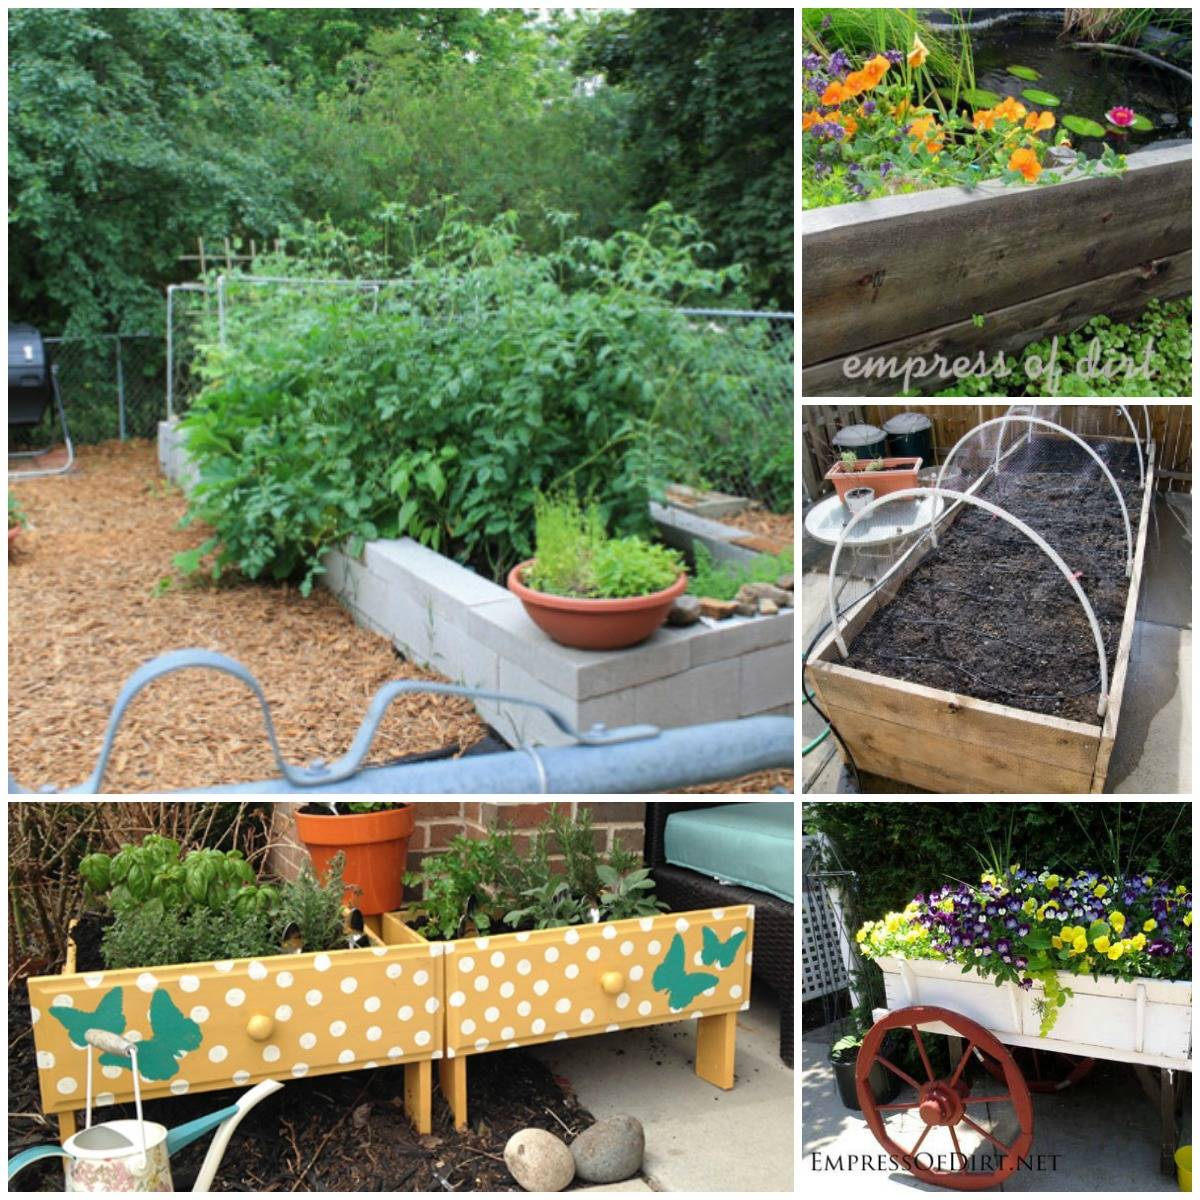 Large Backyard Ideas Raised Beds Raised Bed Vegetable Garden Plans